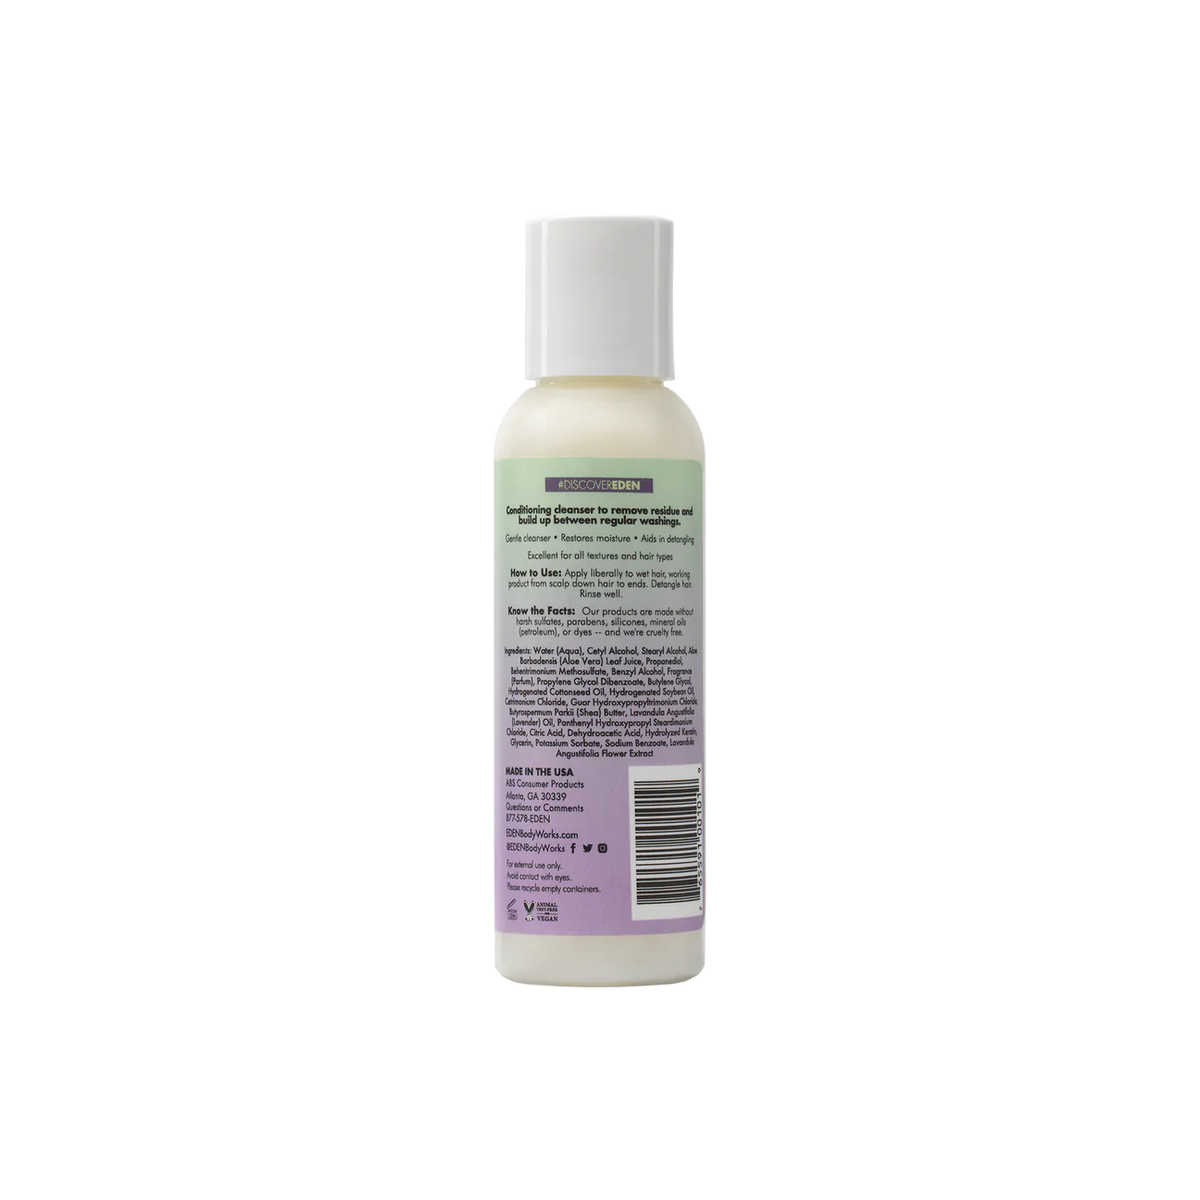 EDEN BodyWorks | Lavender Aloe Moisturizing Co-wash | Travel Size (2oz)